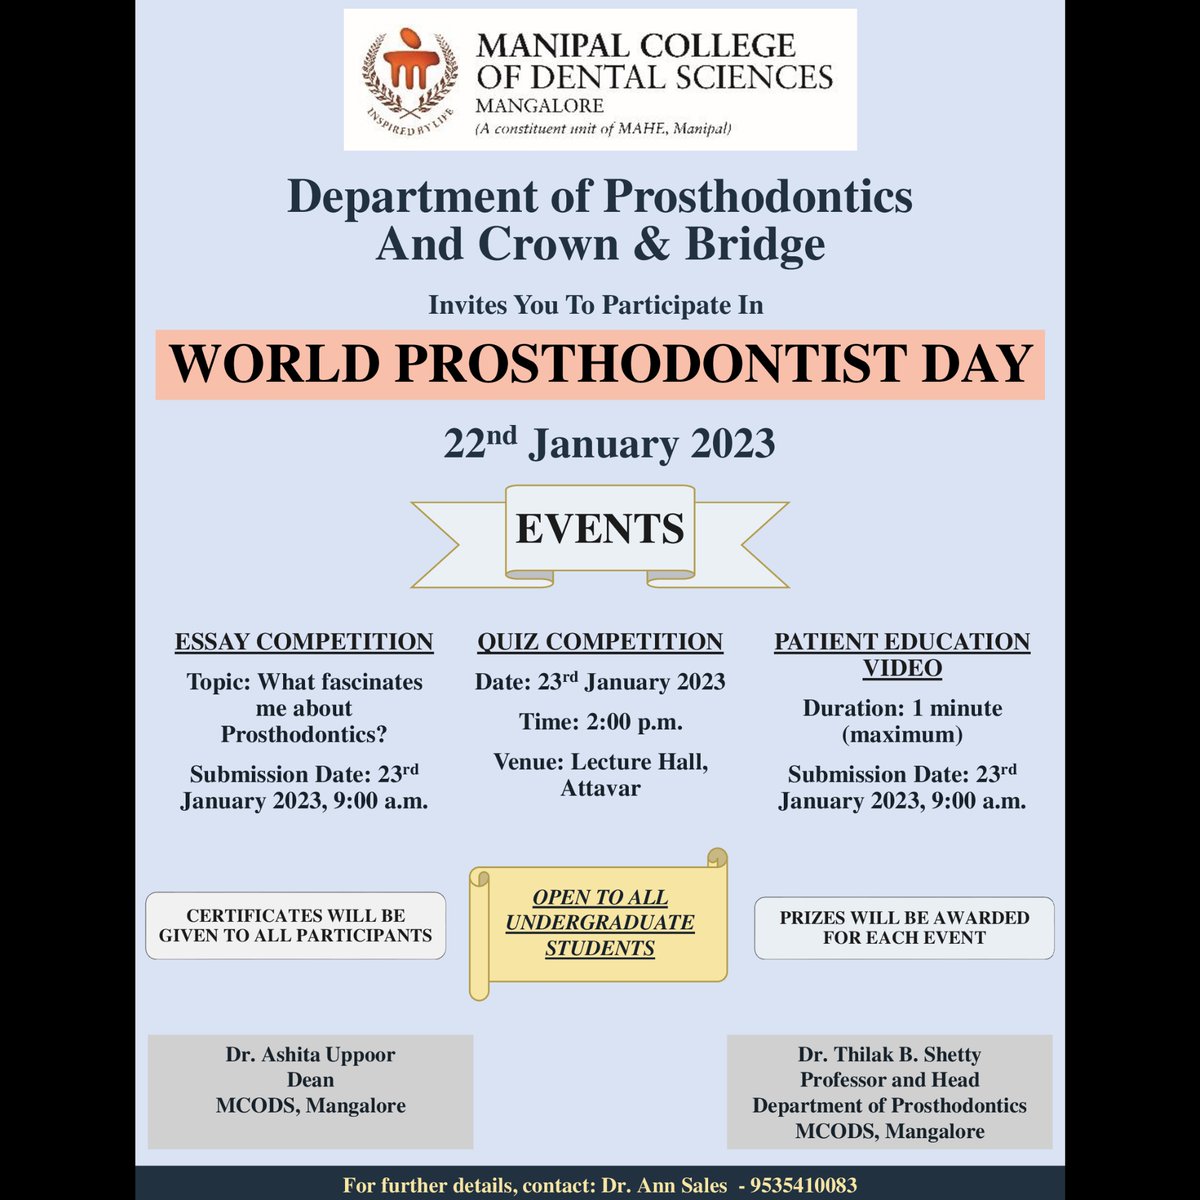 World Prosthodontist Day Celebrations, by Dept of Prosthodontics 
#Essaycompetition, #quiz #patienteducationvideo 

#mahemanipal #mahe_manipal #mcodsmlr #mcodsmangalore